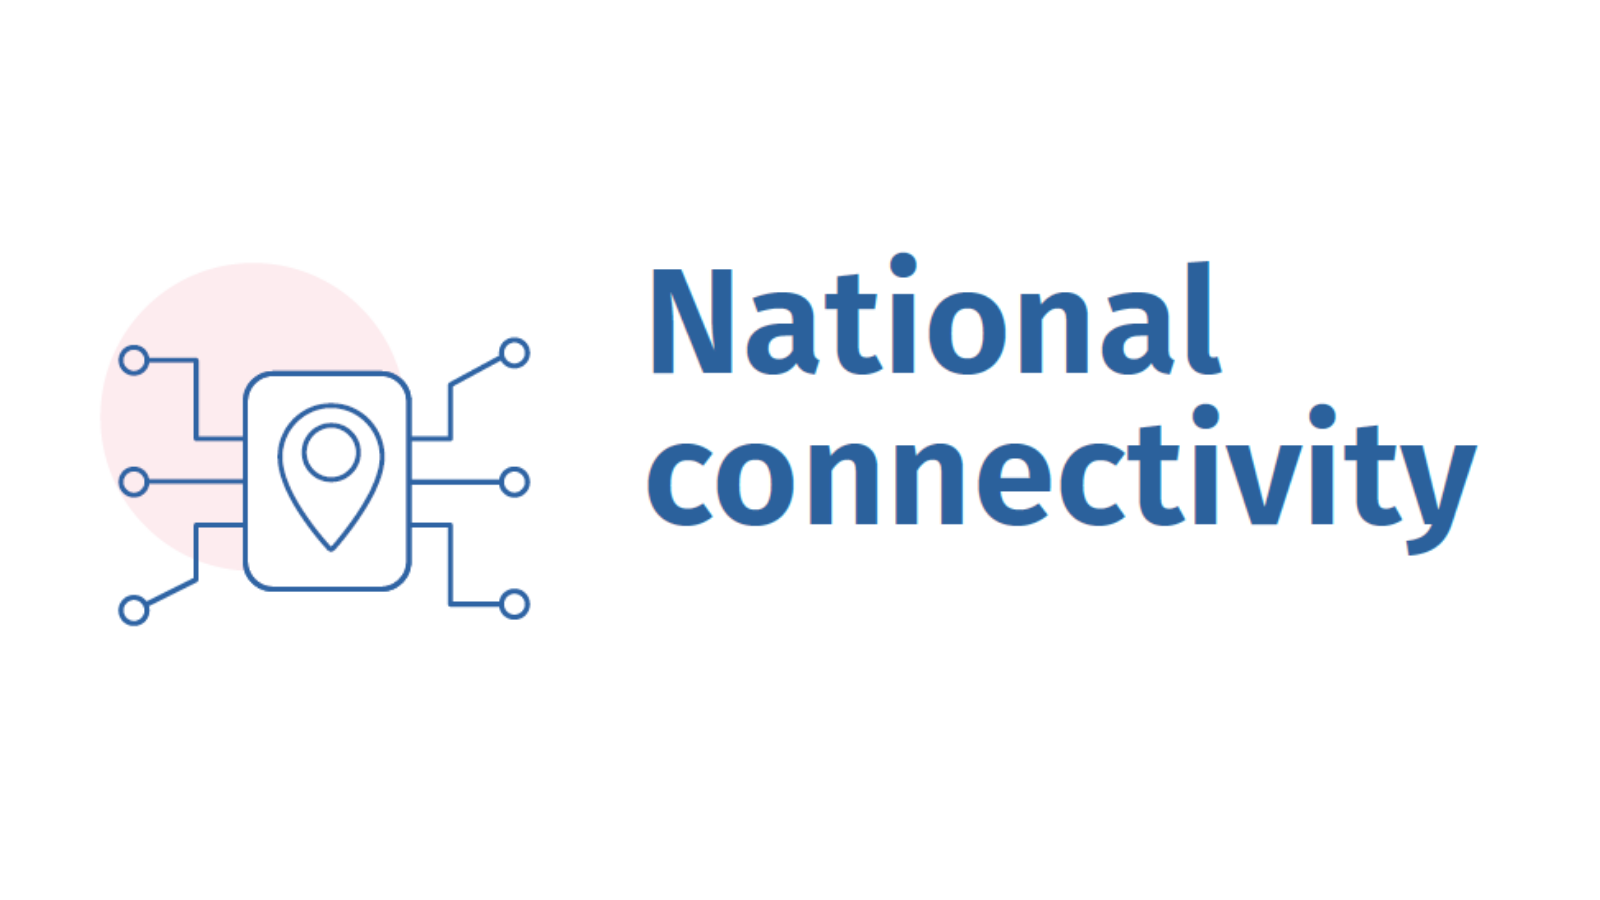 National connectivity illustration